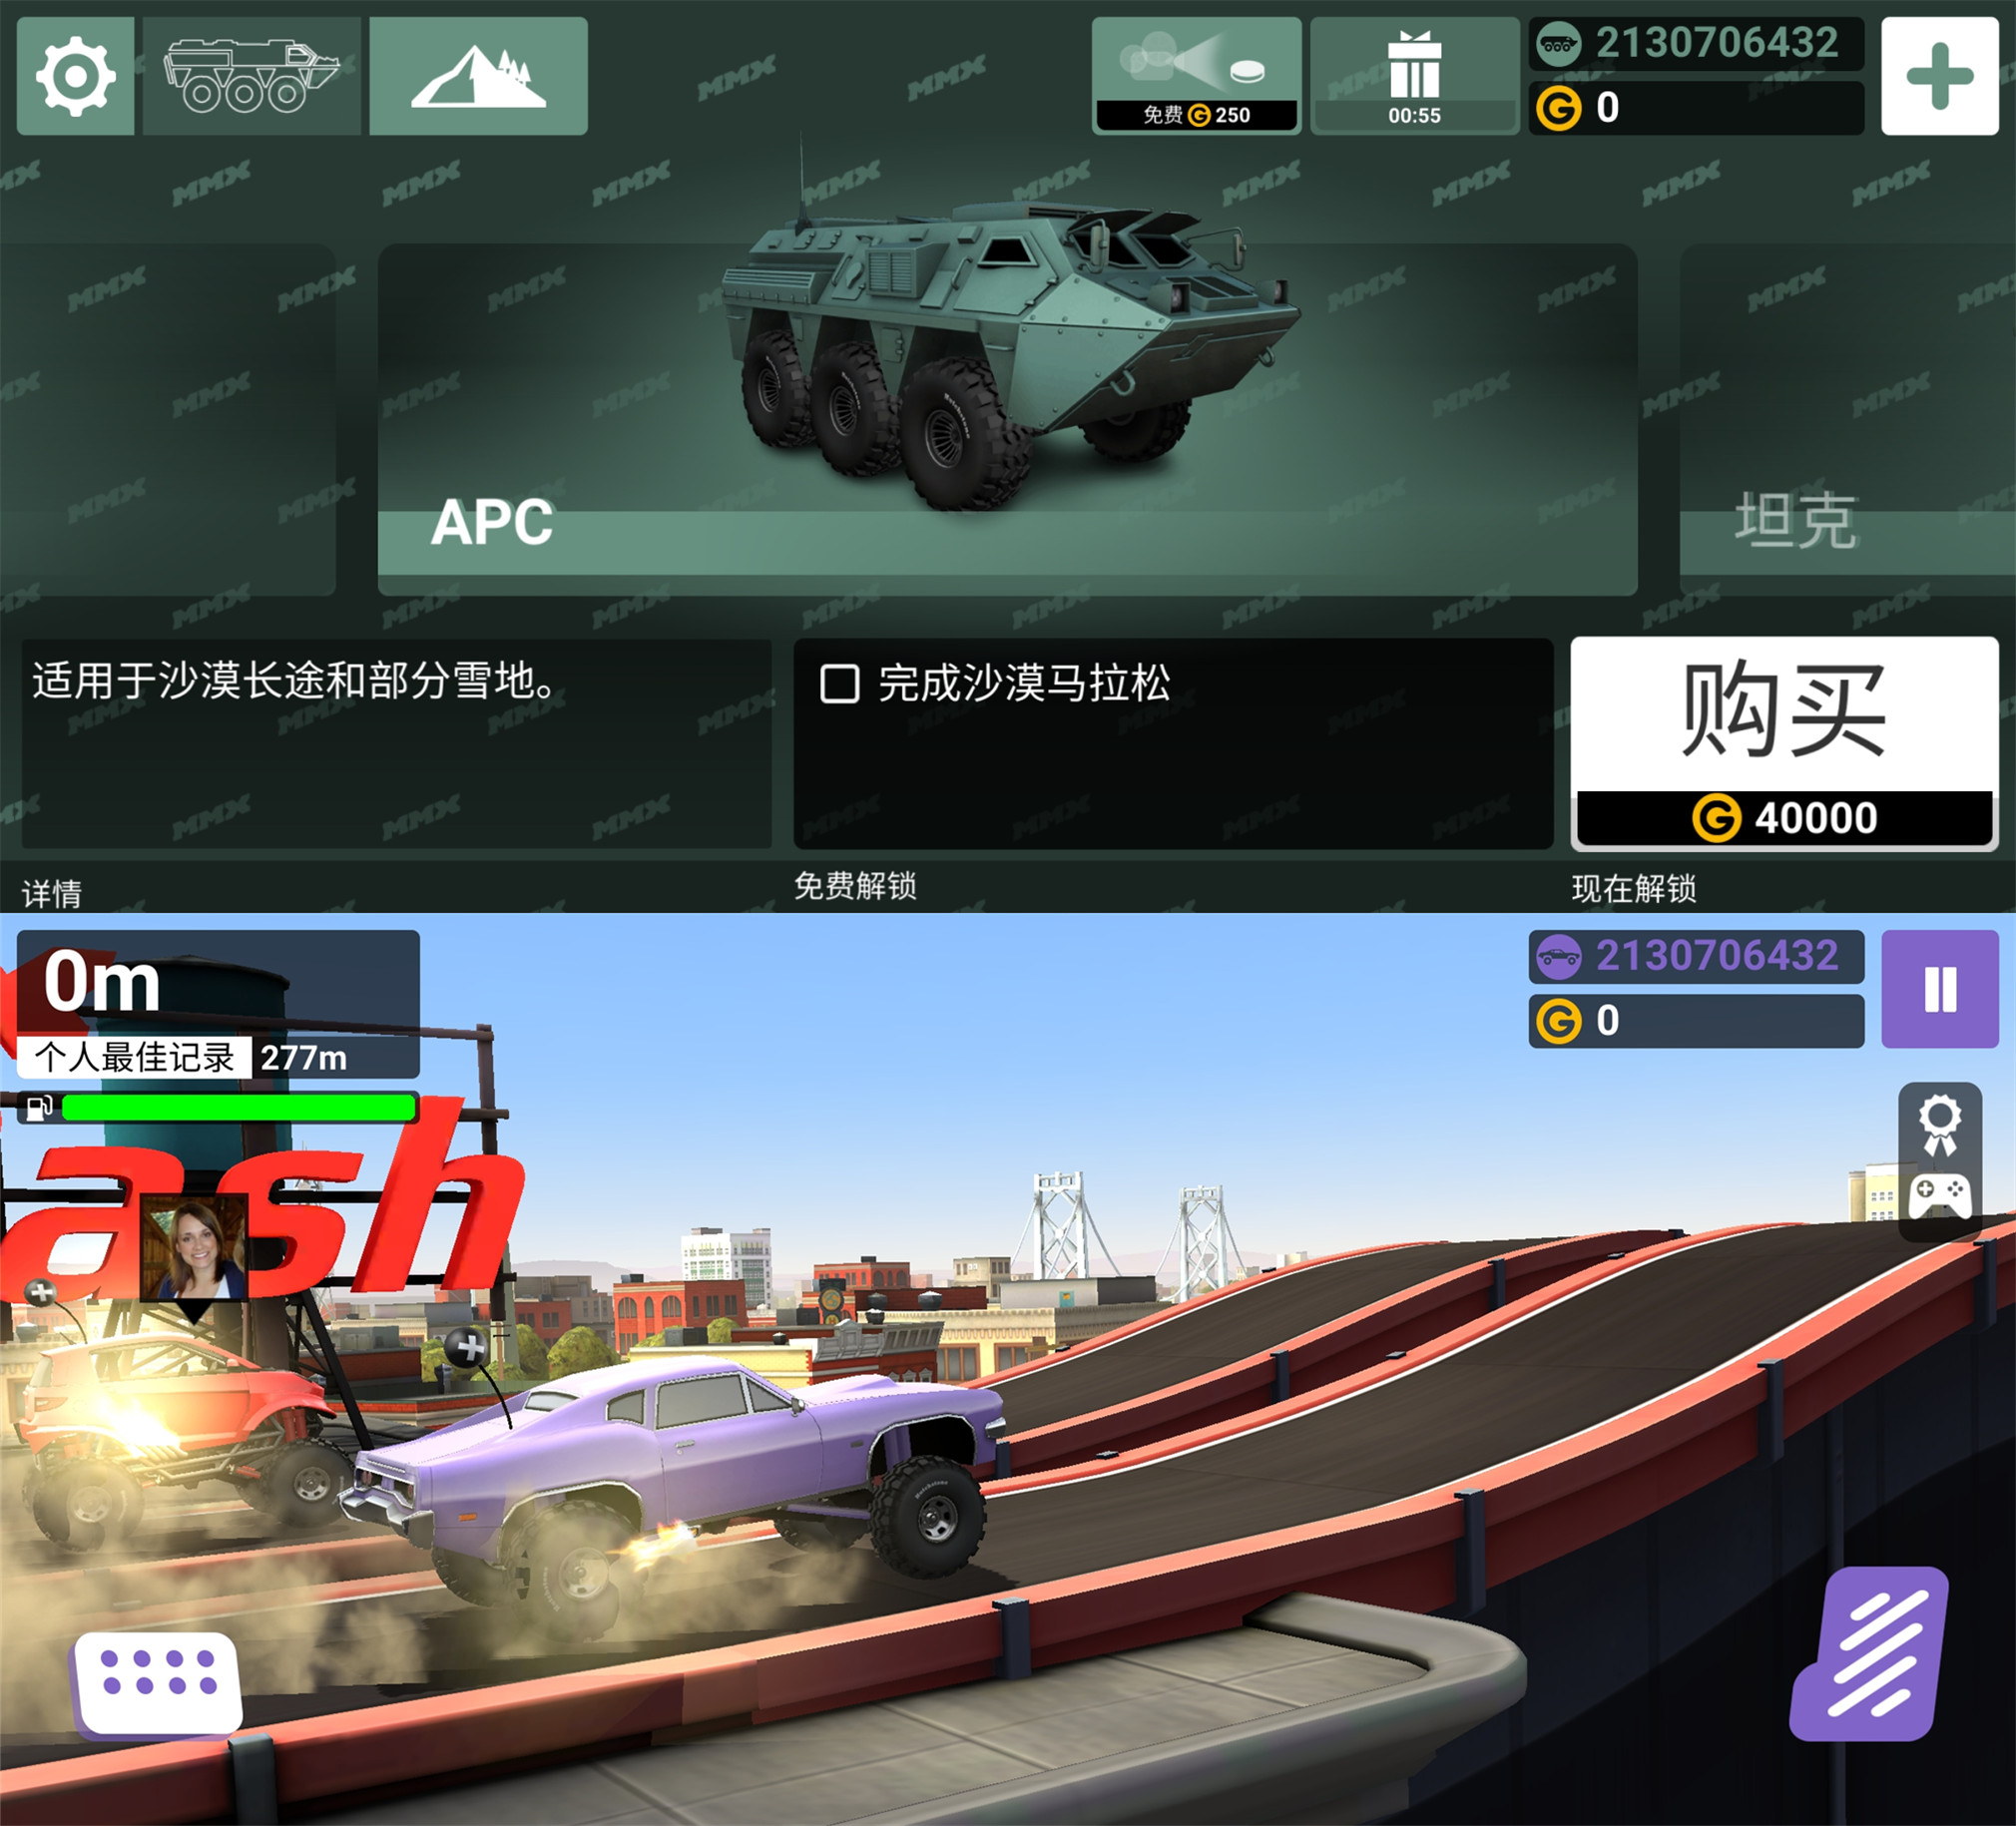 3D赛车游戏 MMX爬坡赛车2 无限金钱